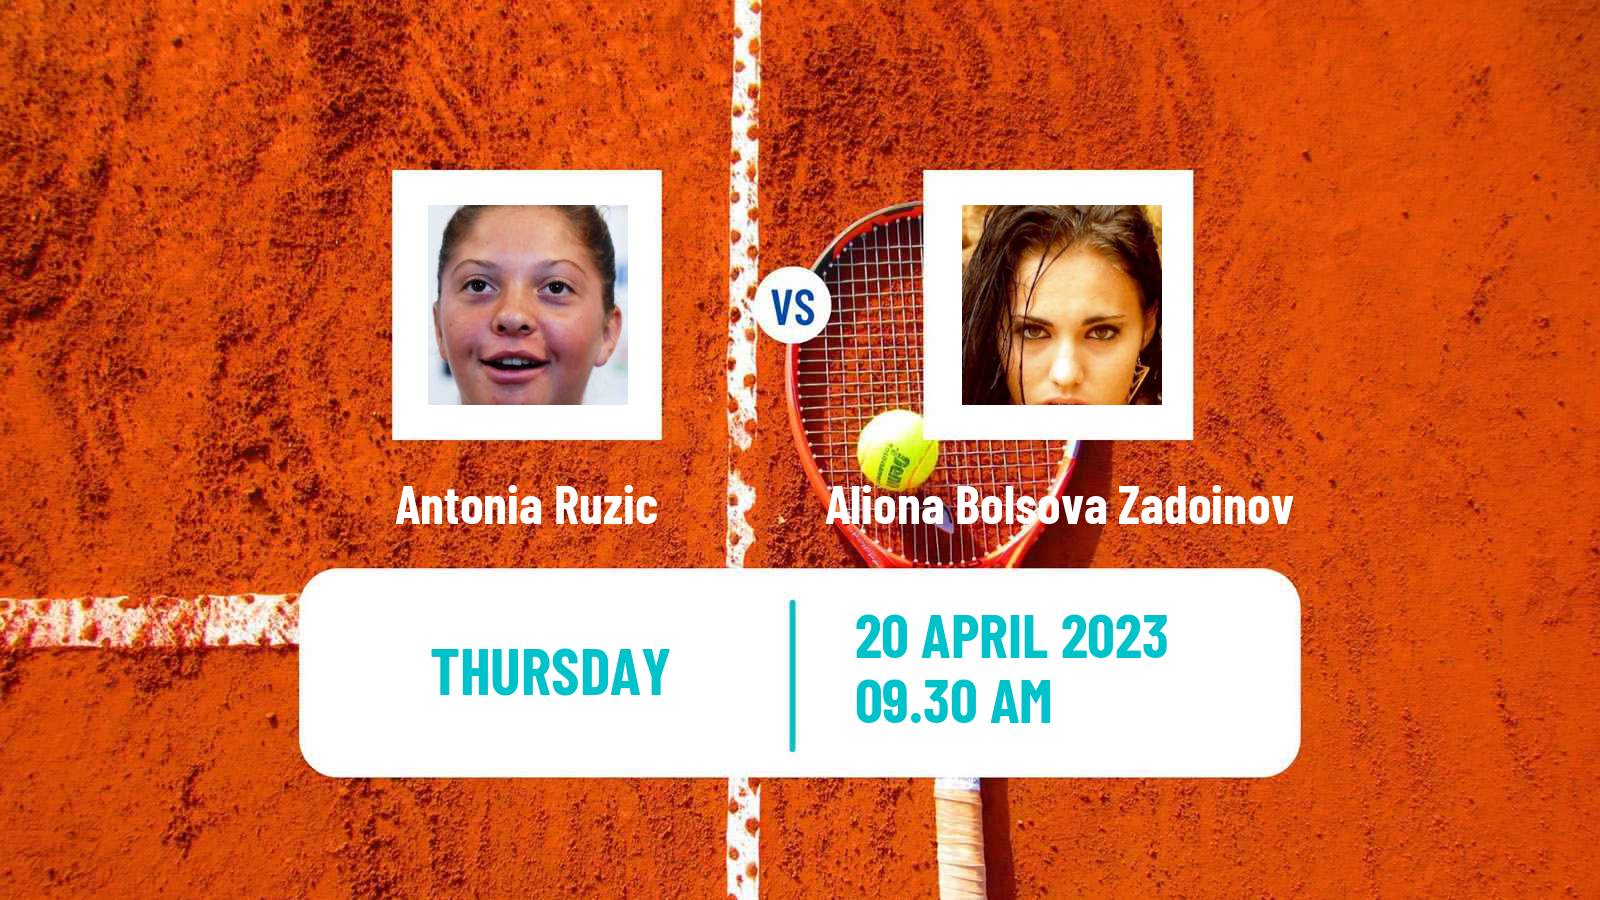 Tennis ITF Tournaments Antonia Ruzic - Aliona Bolsova Zadoinov